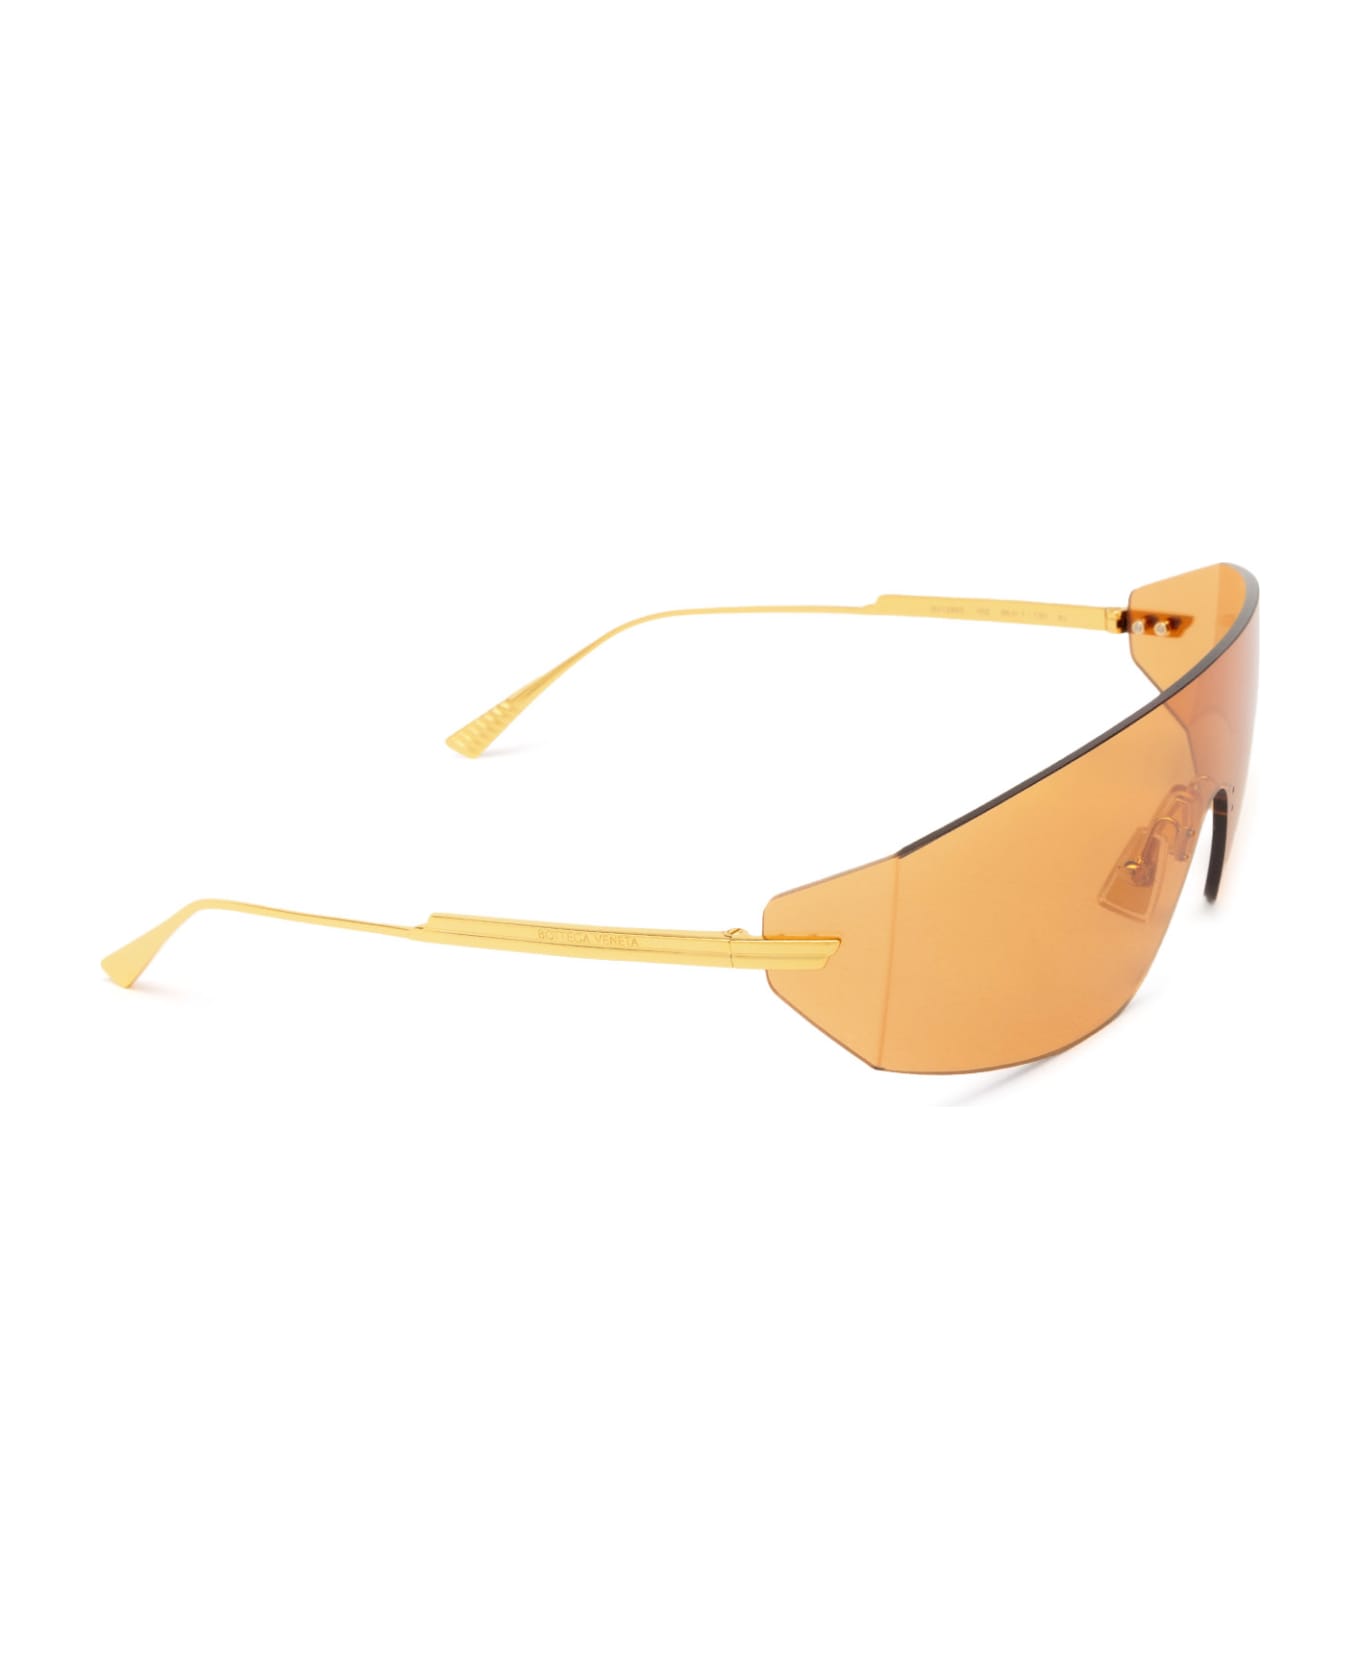 Bottega Veneta Eyewear Bv1299s Gold Sunglasses - Gold サングラス